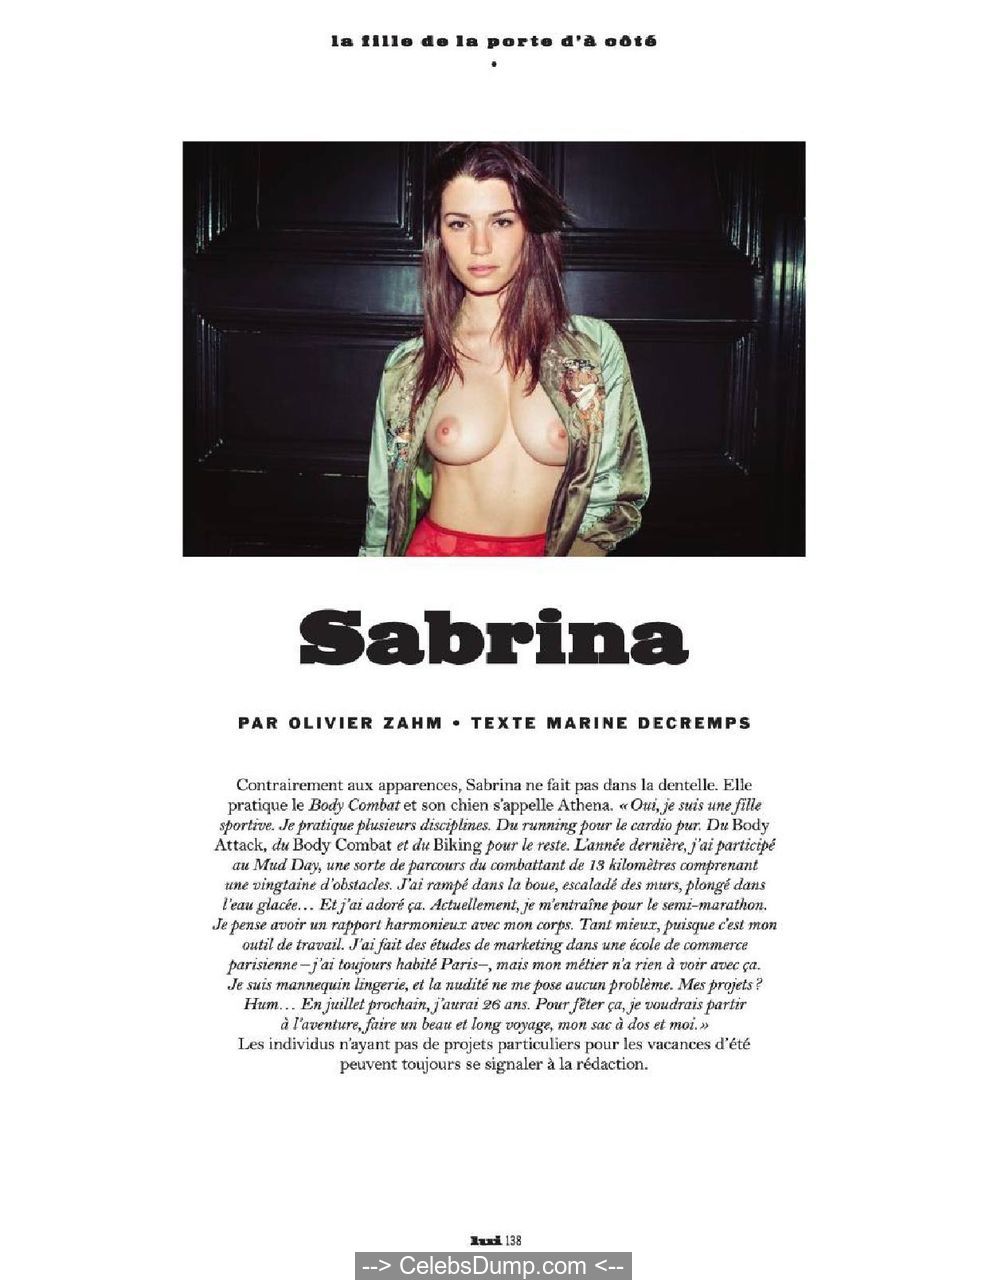 Sabrina Laporte nude boobs and ass for Lui magazine #26 - April 2016.